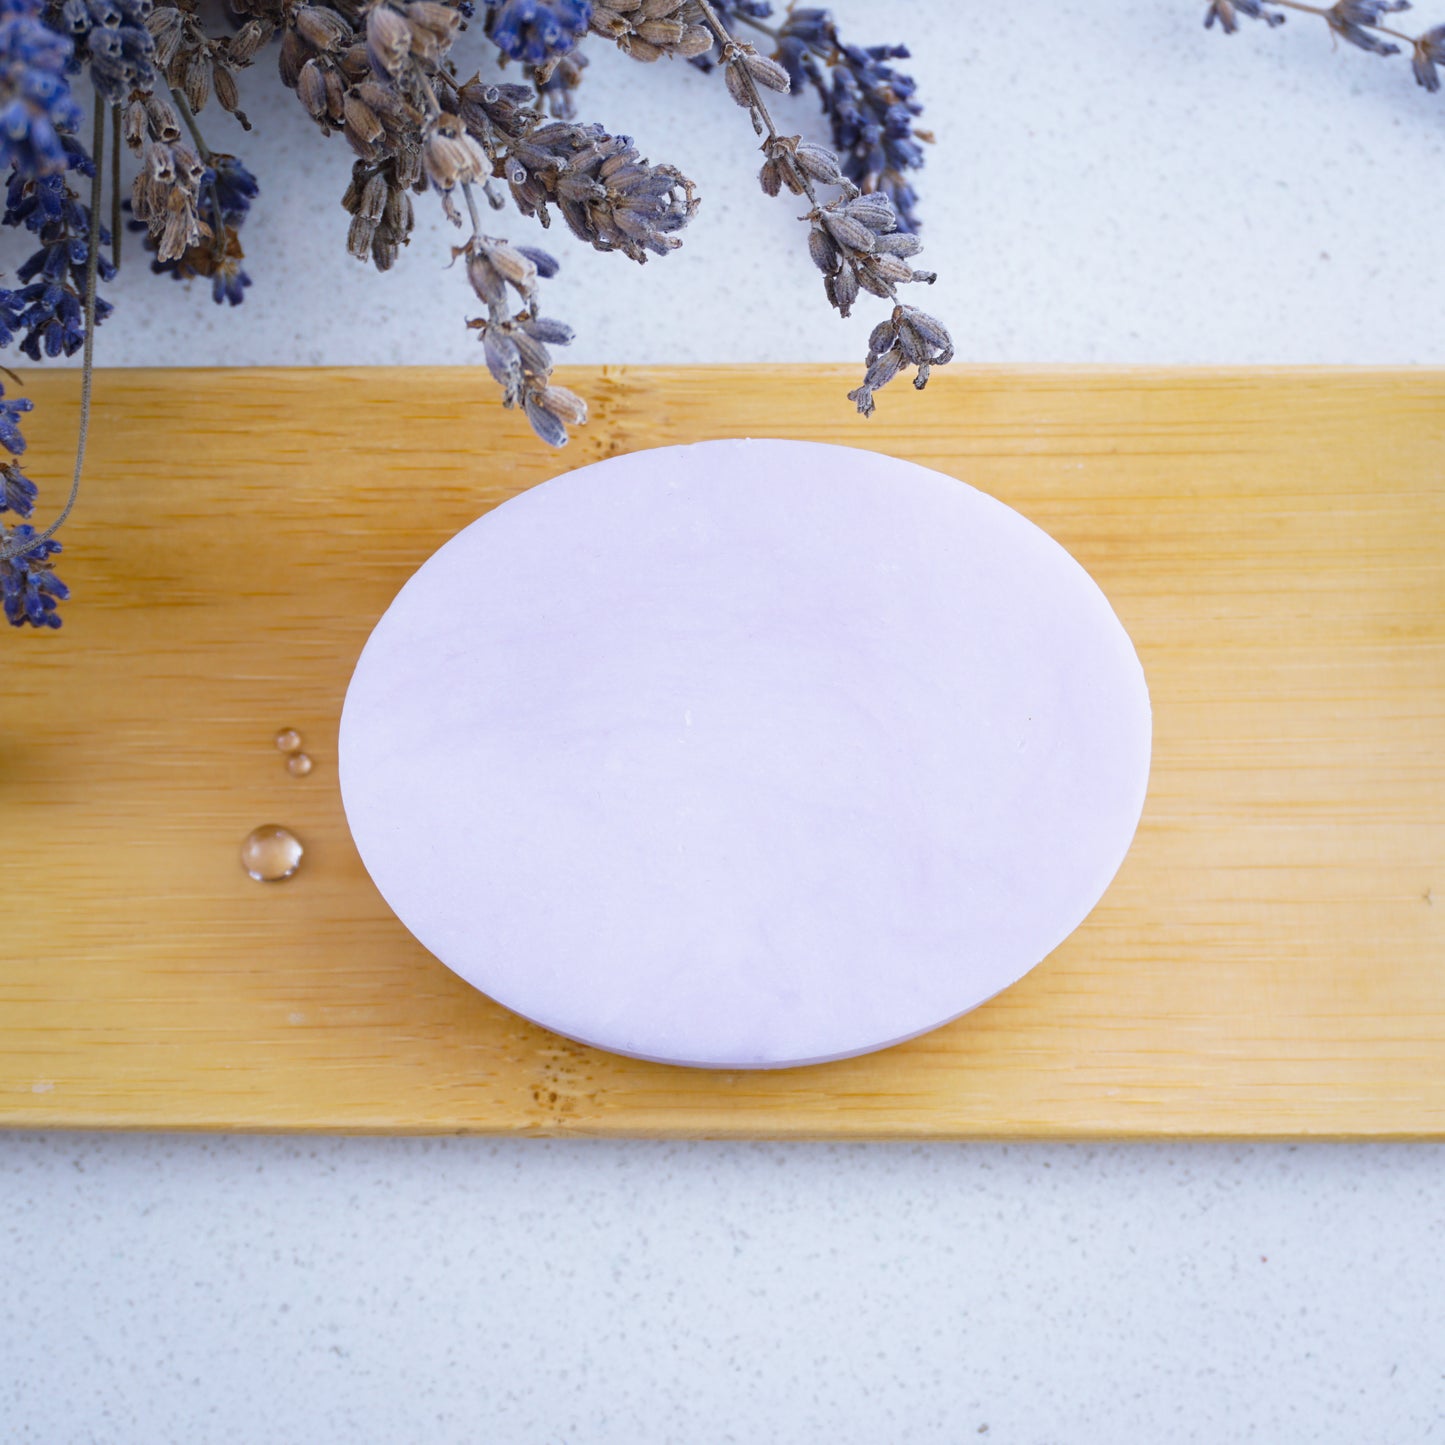 Washla 90g Lavender shampoo bar sitting on bamboo tray with droplets